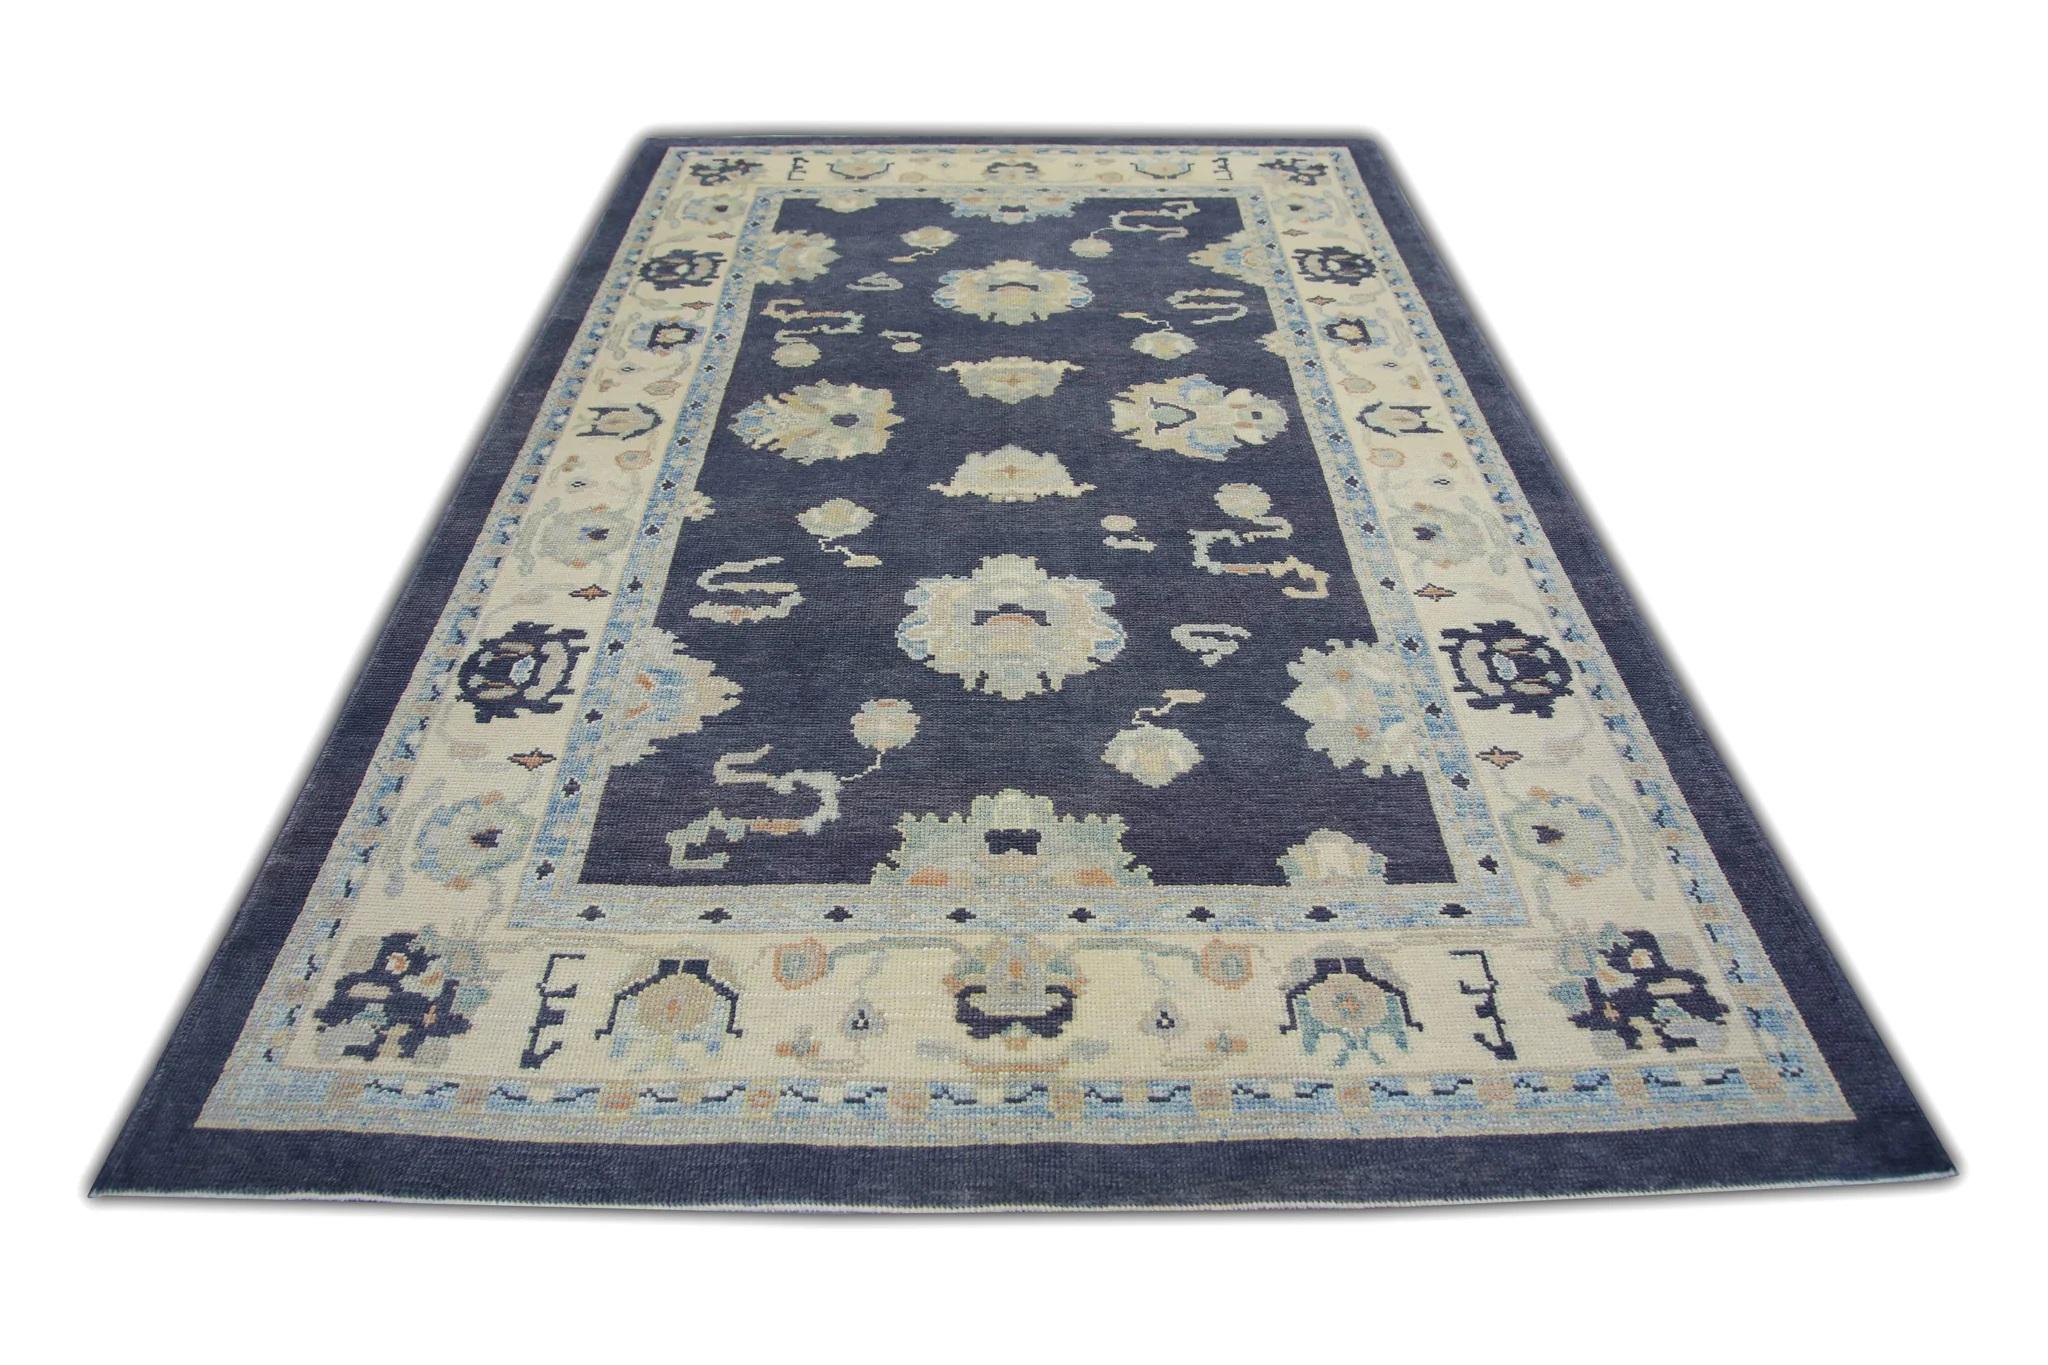 Contemporary Dark Blue Floral Design Handwoven Wool Turkish Oushak Rug 6' x 9'2